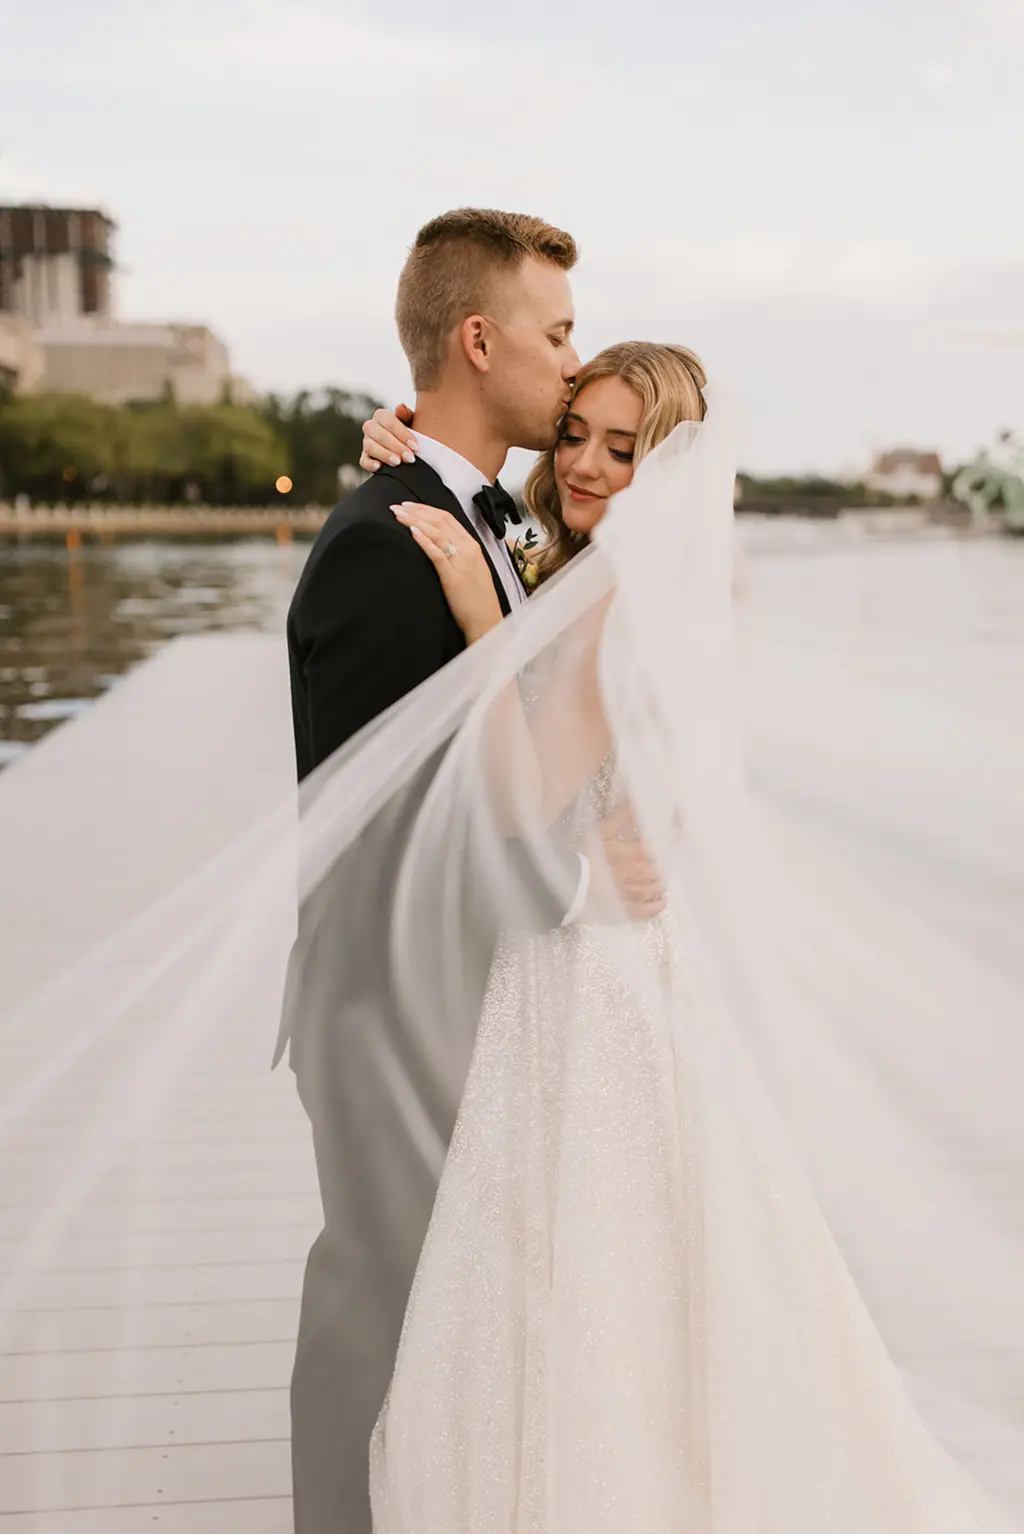 Romantic Moment Between Bride and Groom Wedding Portrait | Tampa Bay Planner Coastal Coordinating